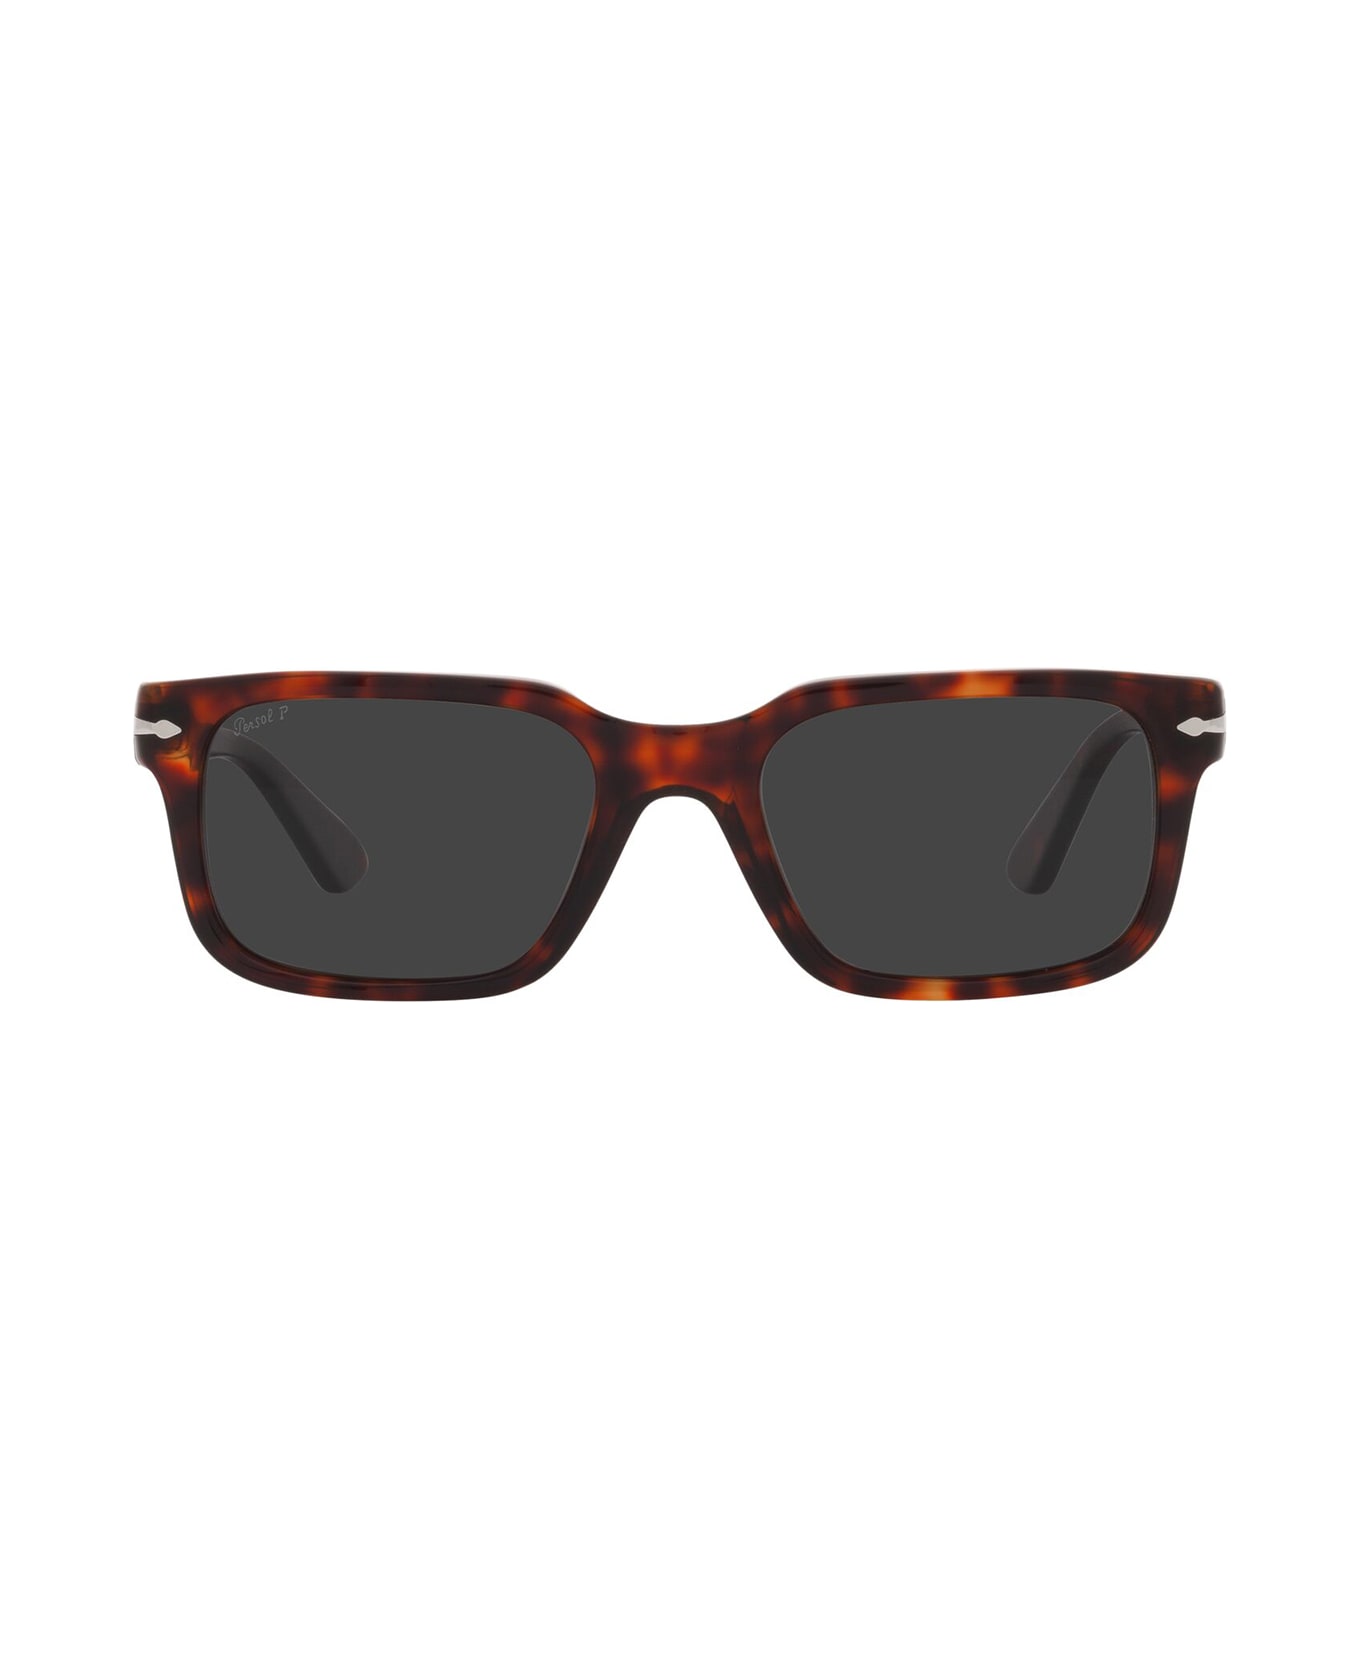 Persol Po3272s Havana Sunglasses - Havana サングラス